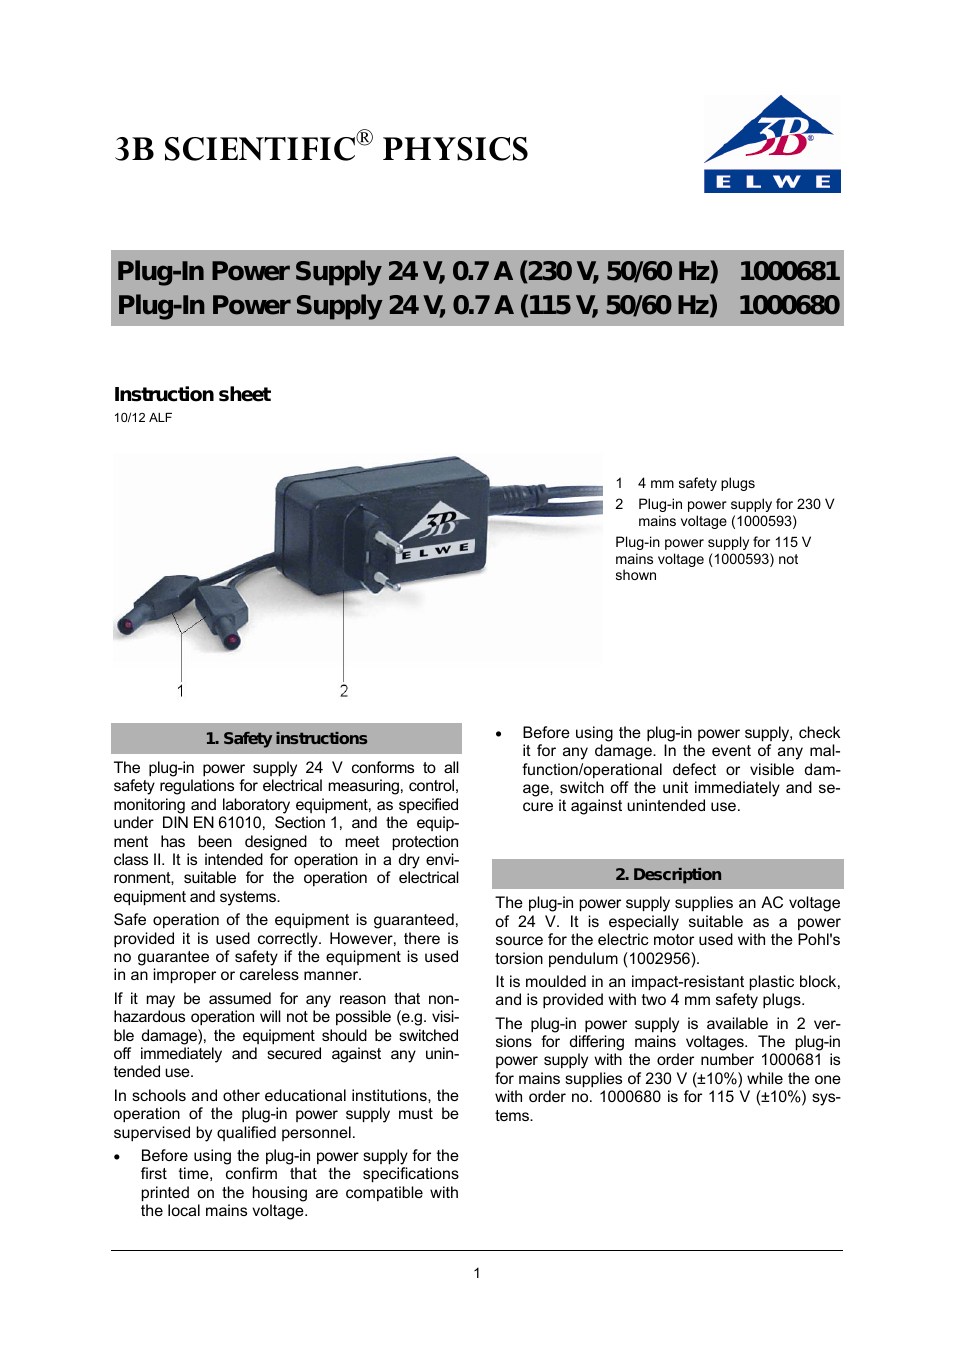 AC Plug-in Power Supply 24 V, 0.7 A (115 V, 50__60 Hz)